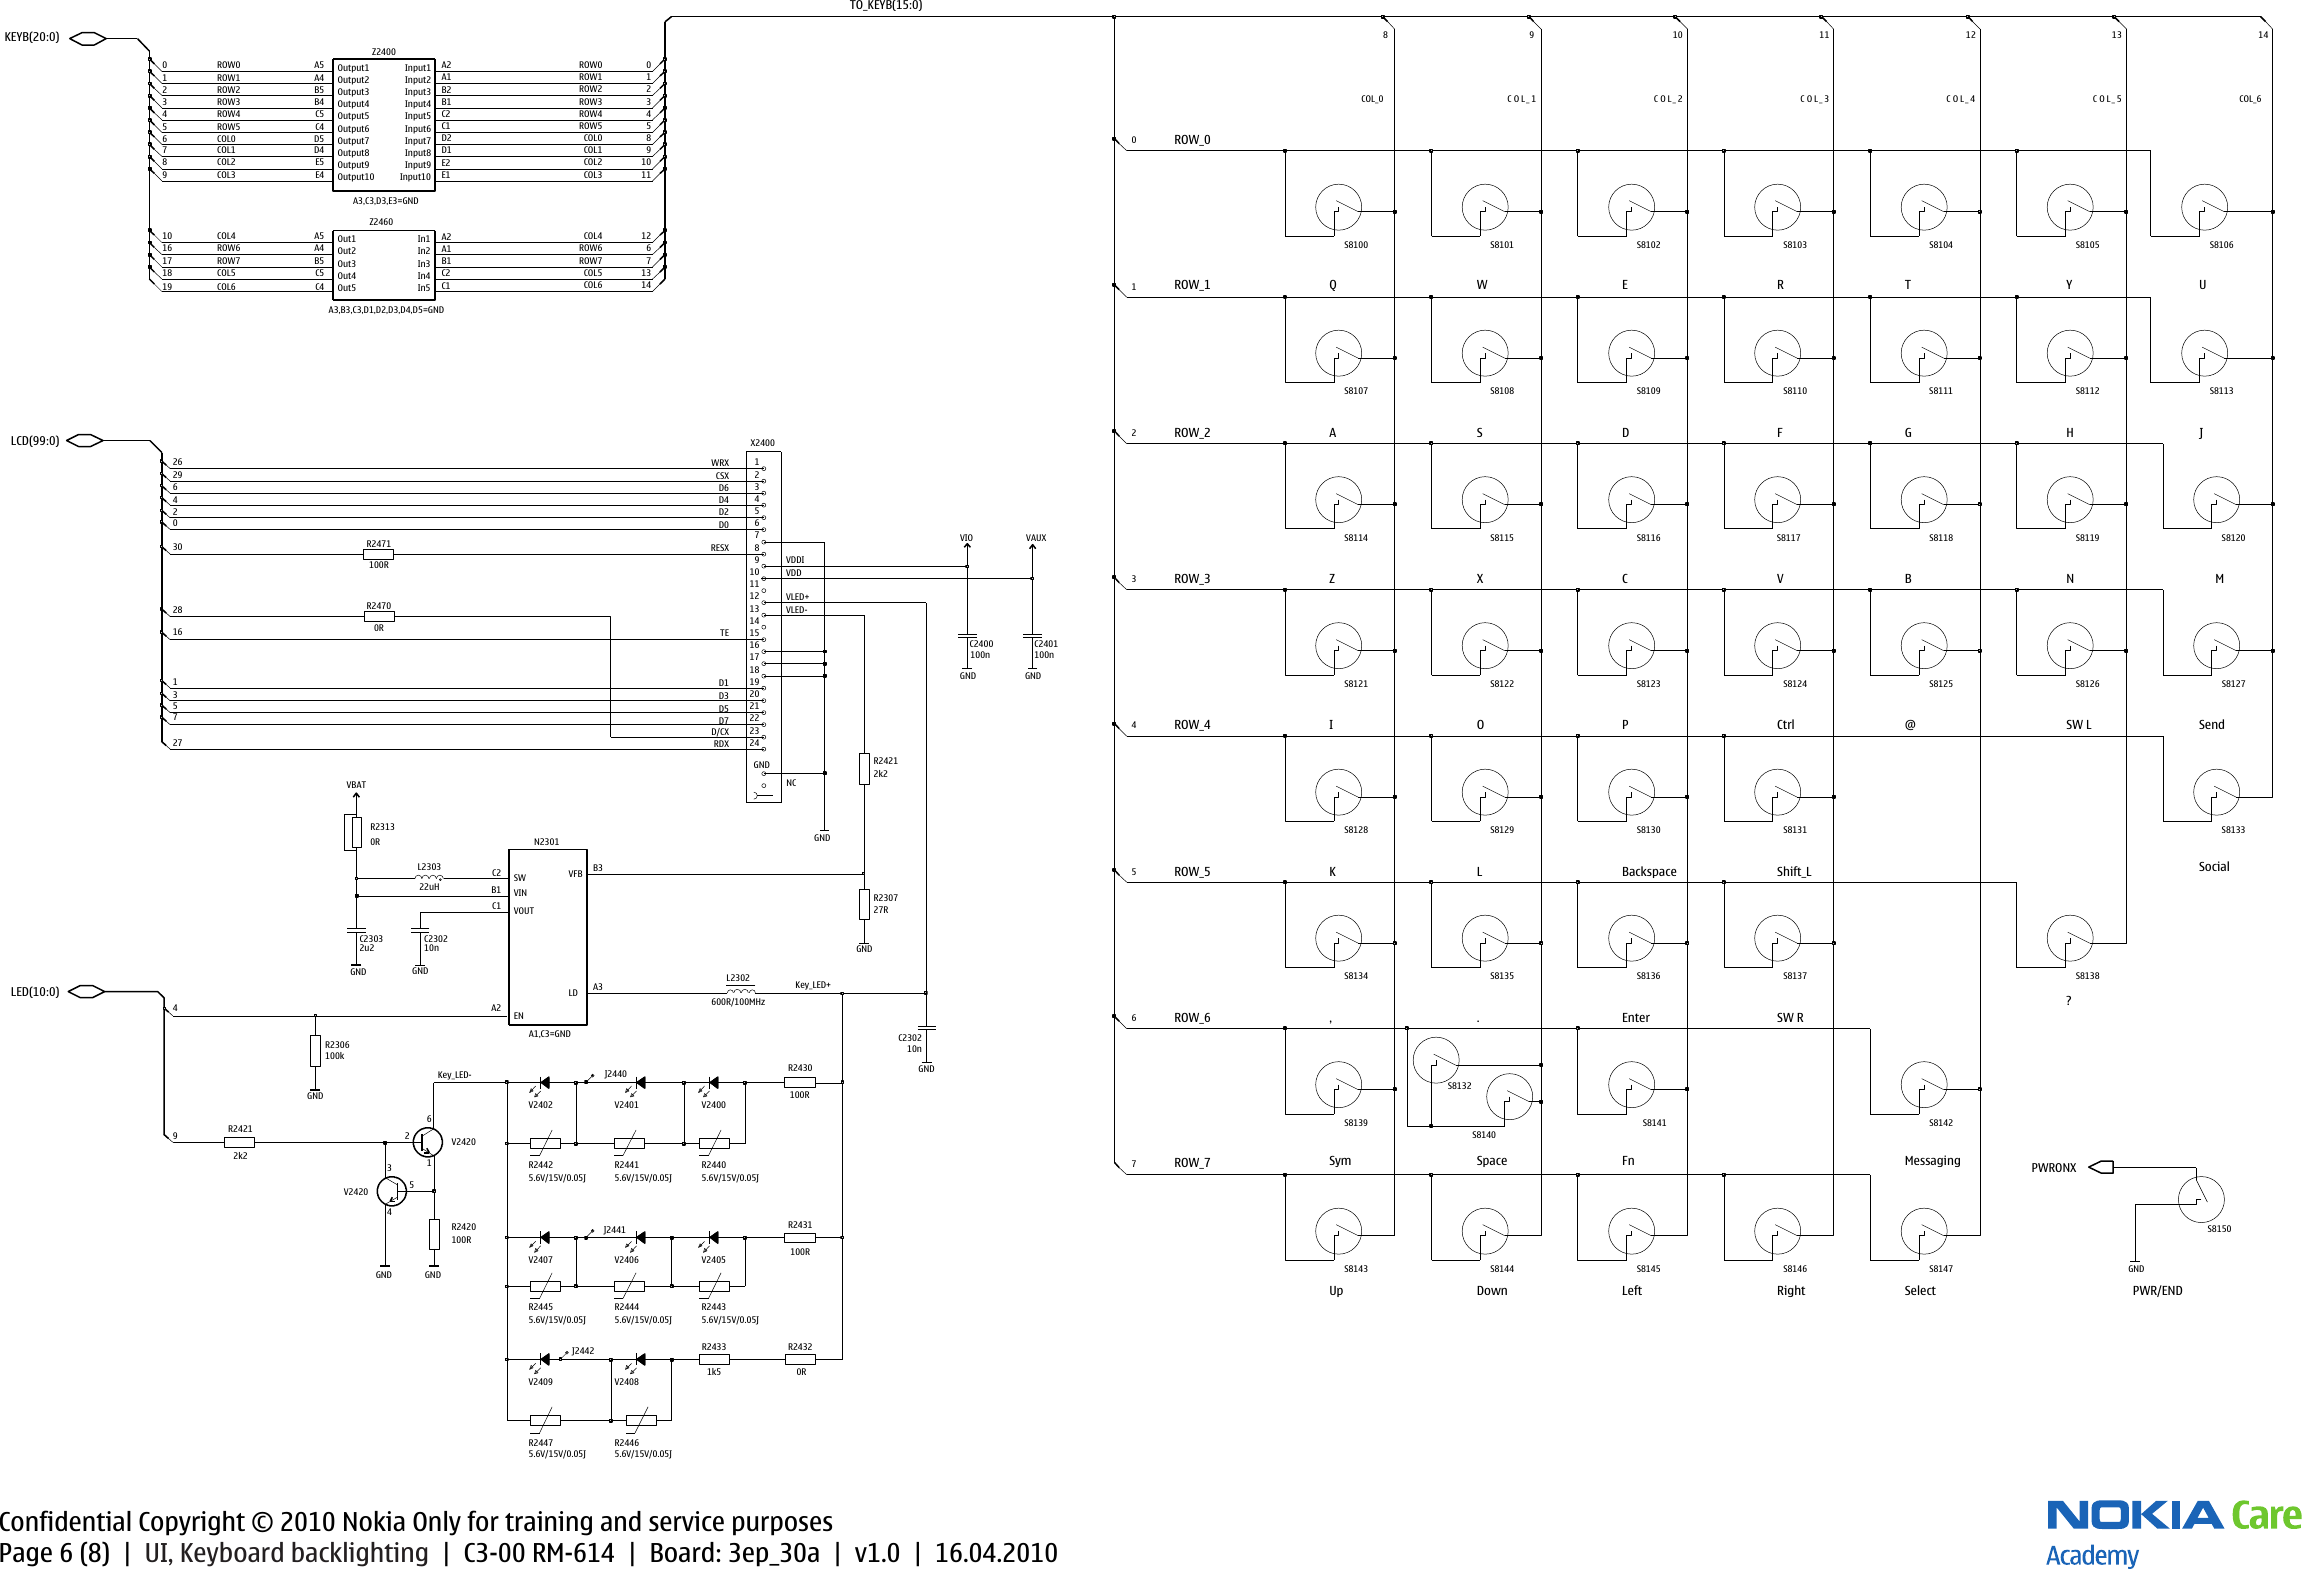 Page 6 of 8 - Nokia C3-00 RM-614 Service Schematics V1.0